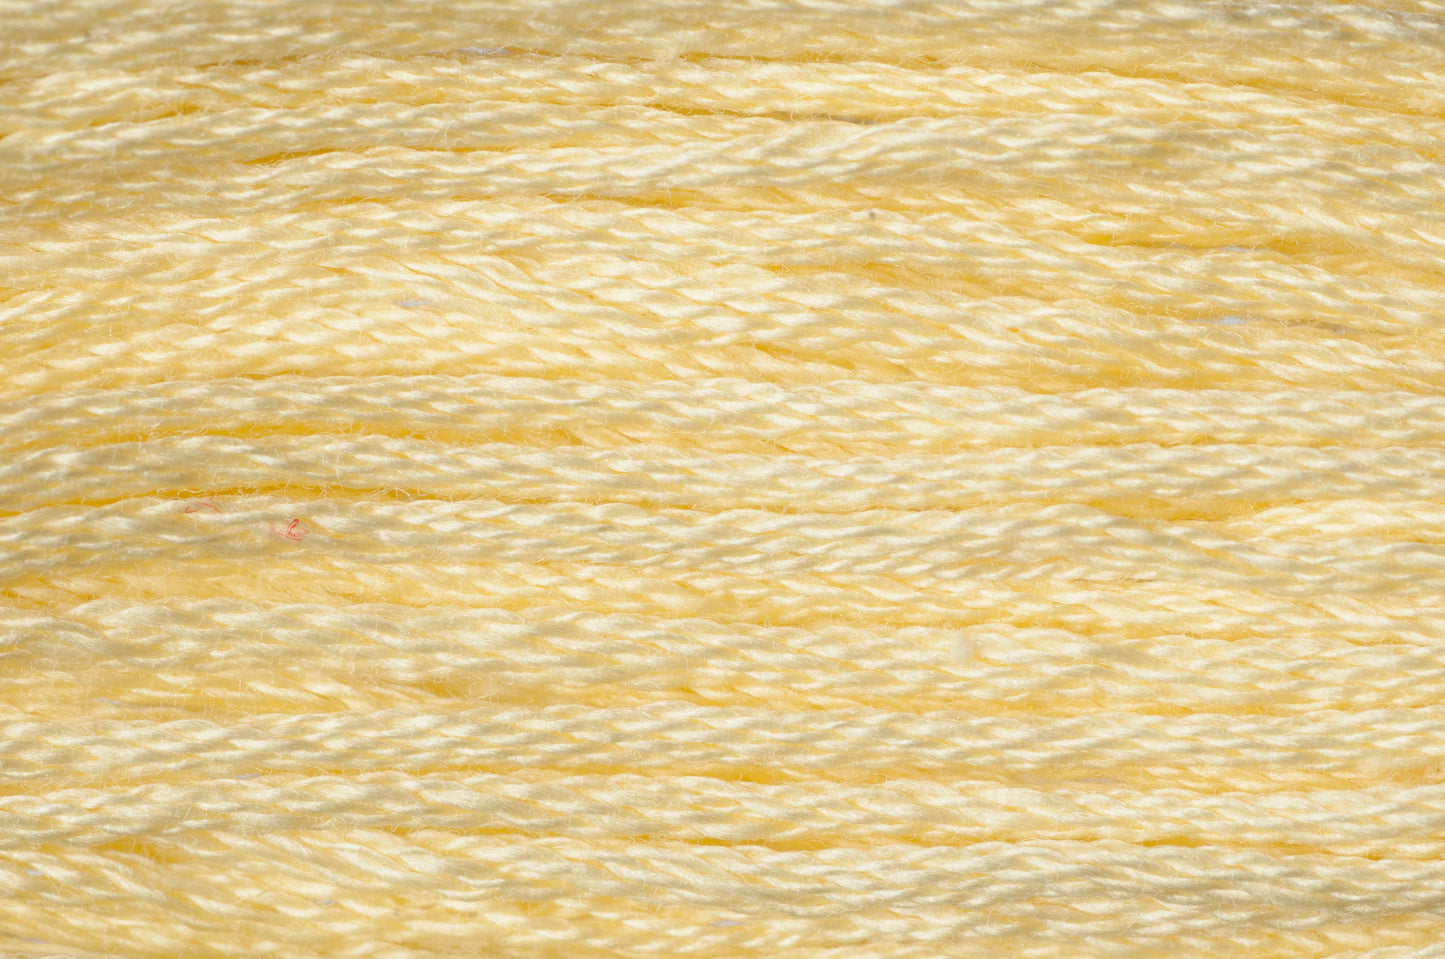 Thread: Stranded Cotton: 8m:0251